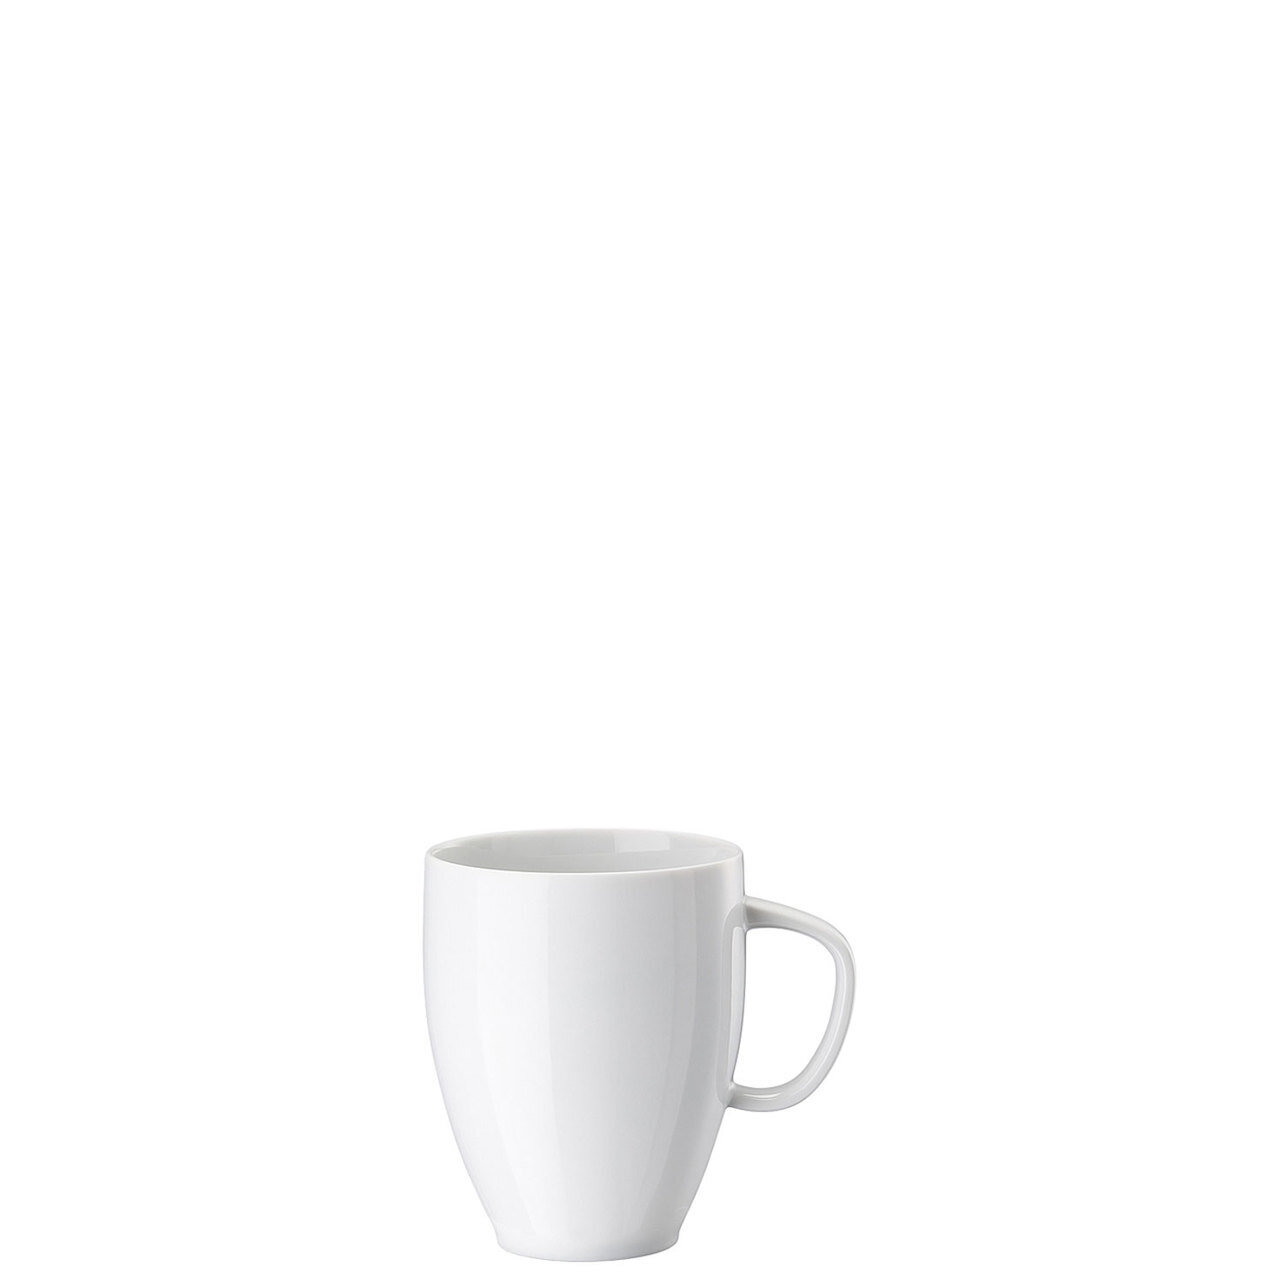 Rosenthal Junto White Mug With Handle 12 3/4 oz